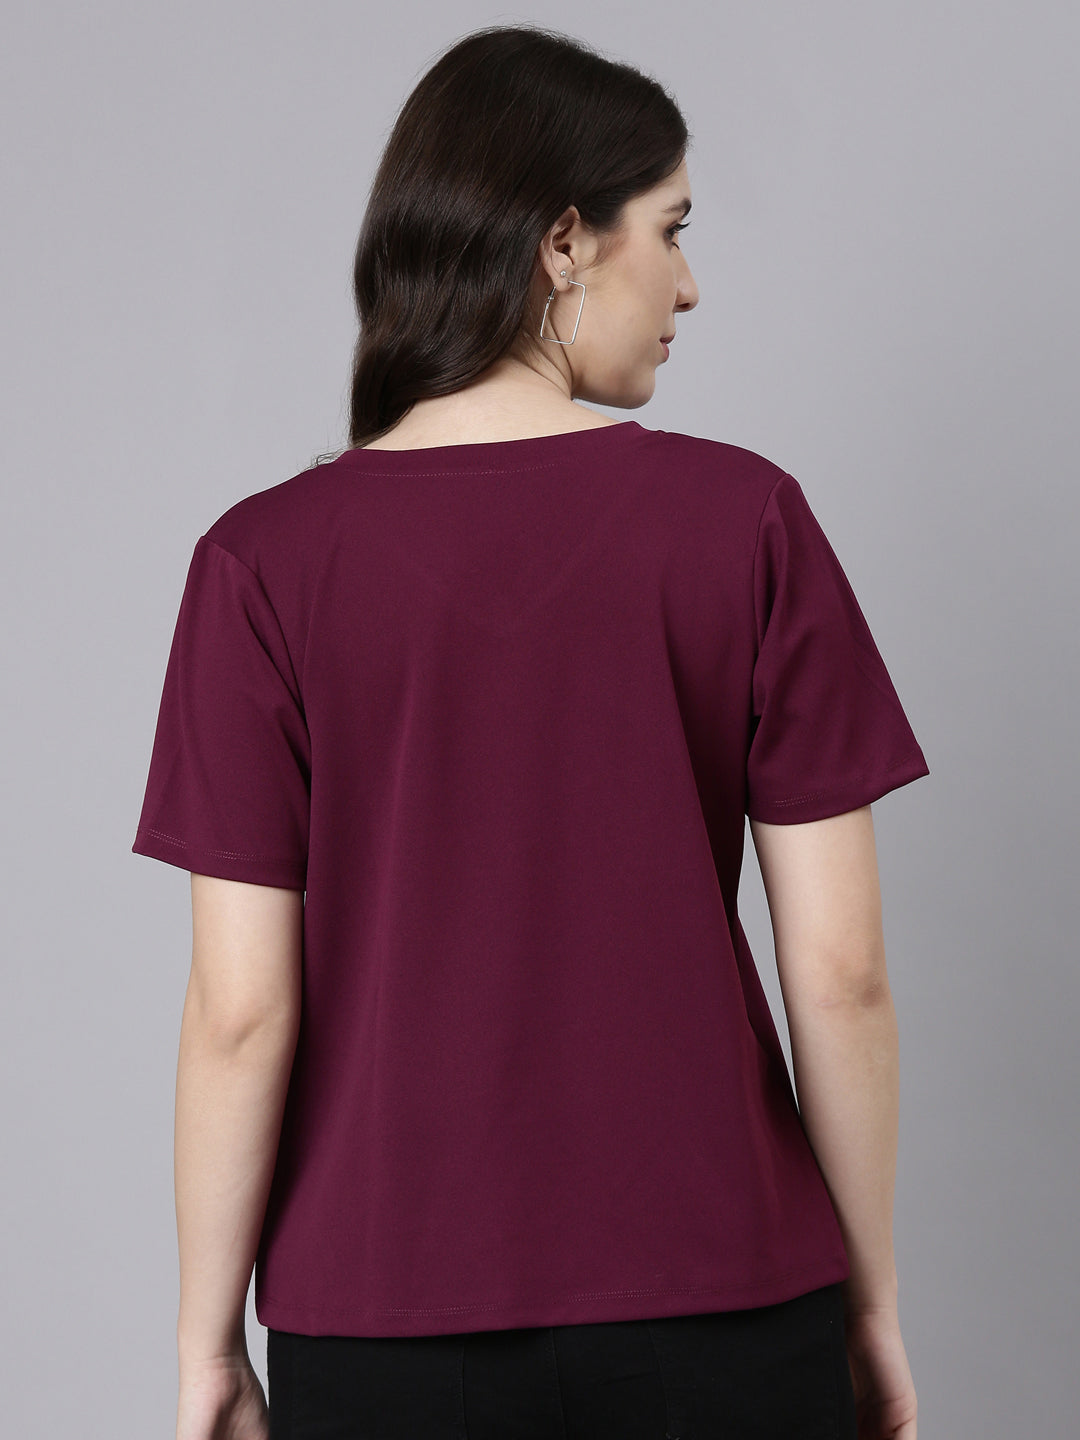 TheShaili V-Neck Half Sleeves Women's Regular Fit Solid Plum Color Plain T-Shirt Women's Ladies Girls/Tops Stylish V-Neck Regular Fit Cotton